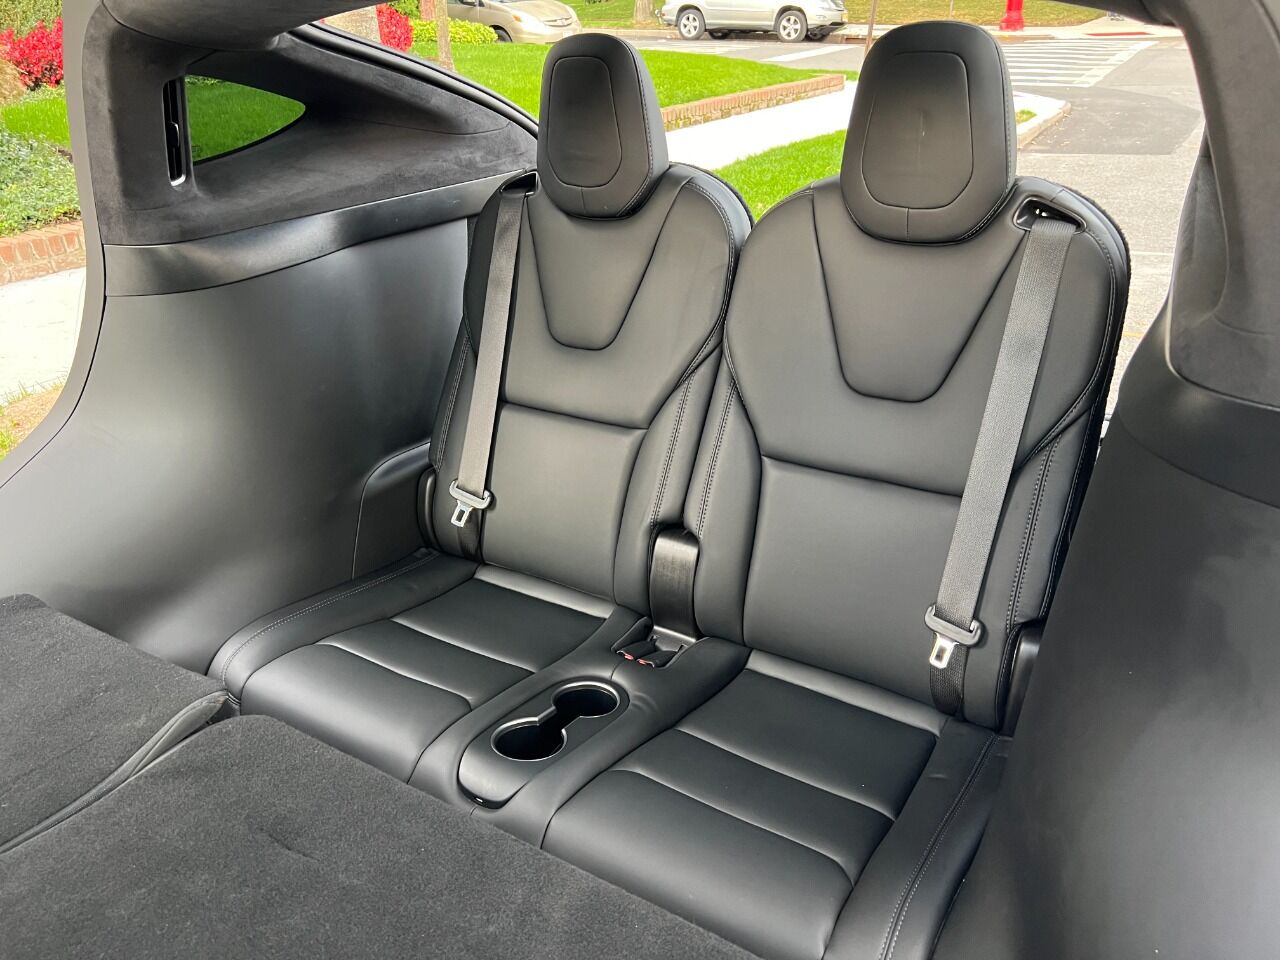 2020 TESLA Model X SUV / Crossover - $79,900